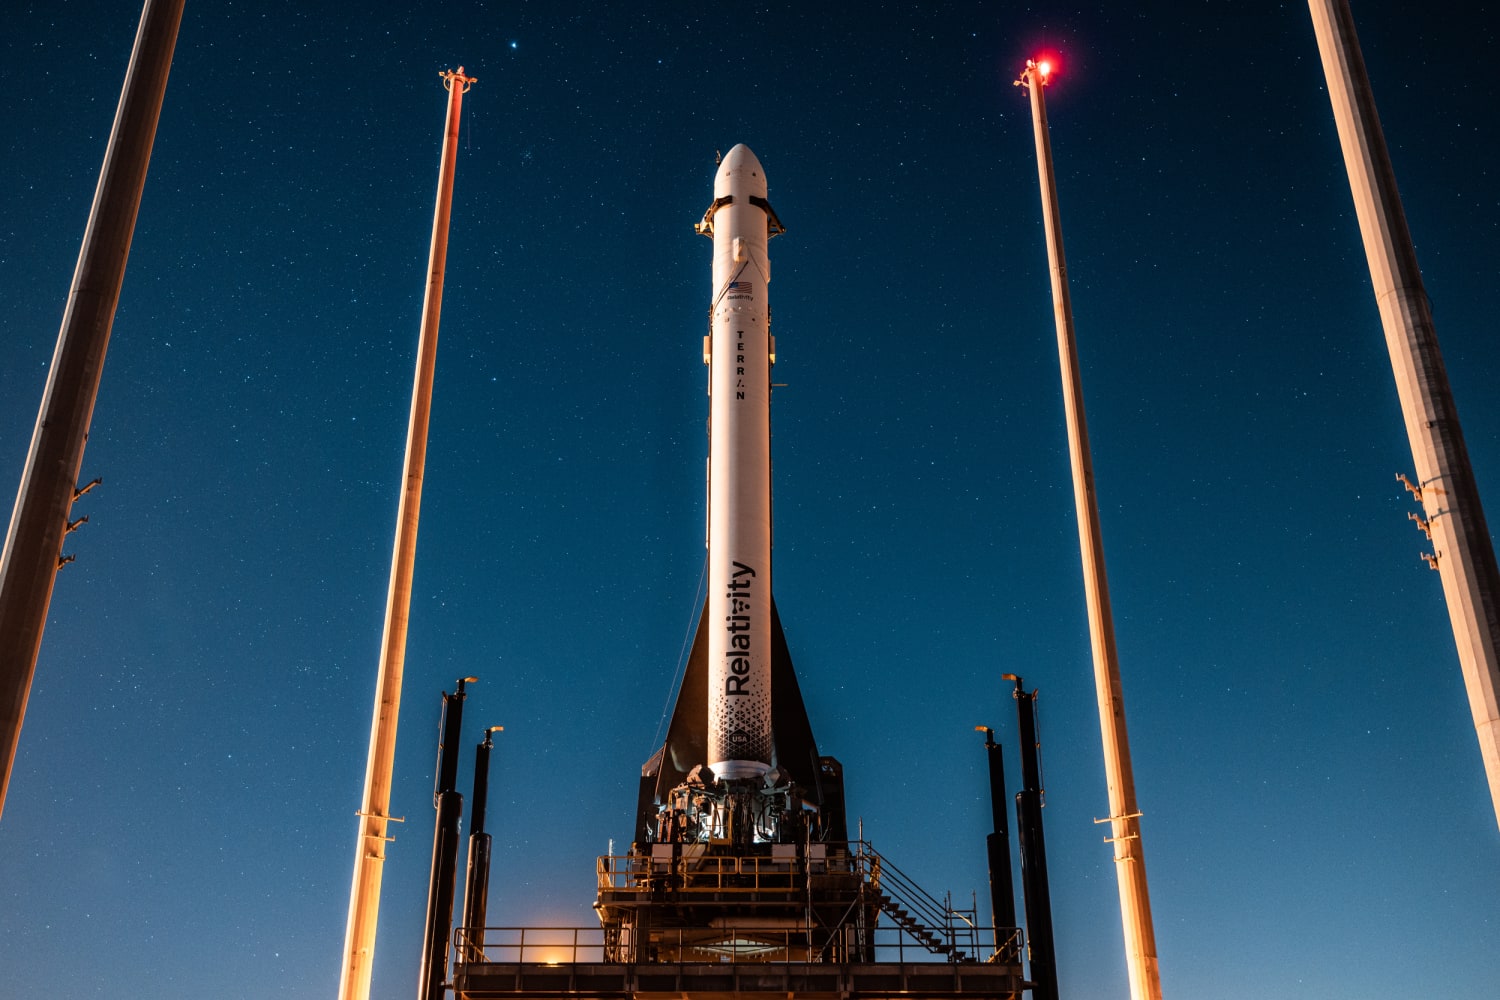 Last-minute aborts thwart world's first rocket